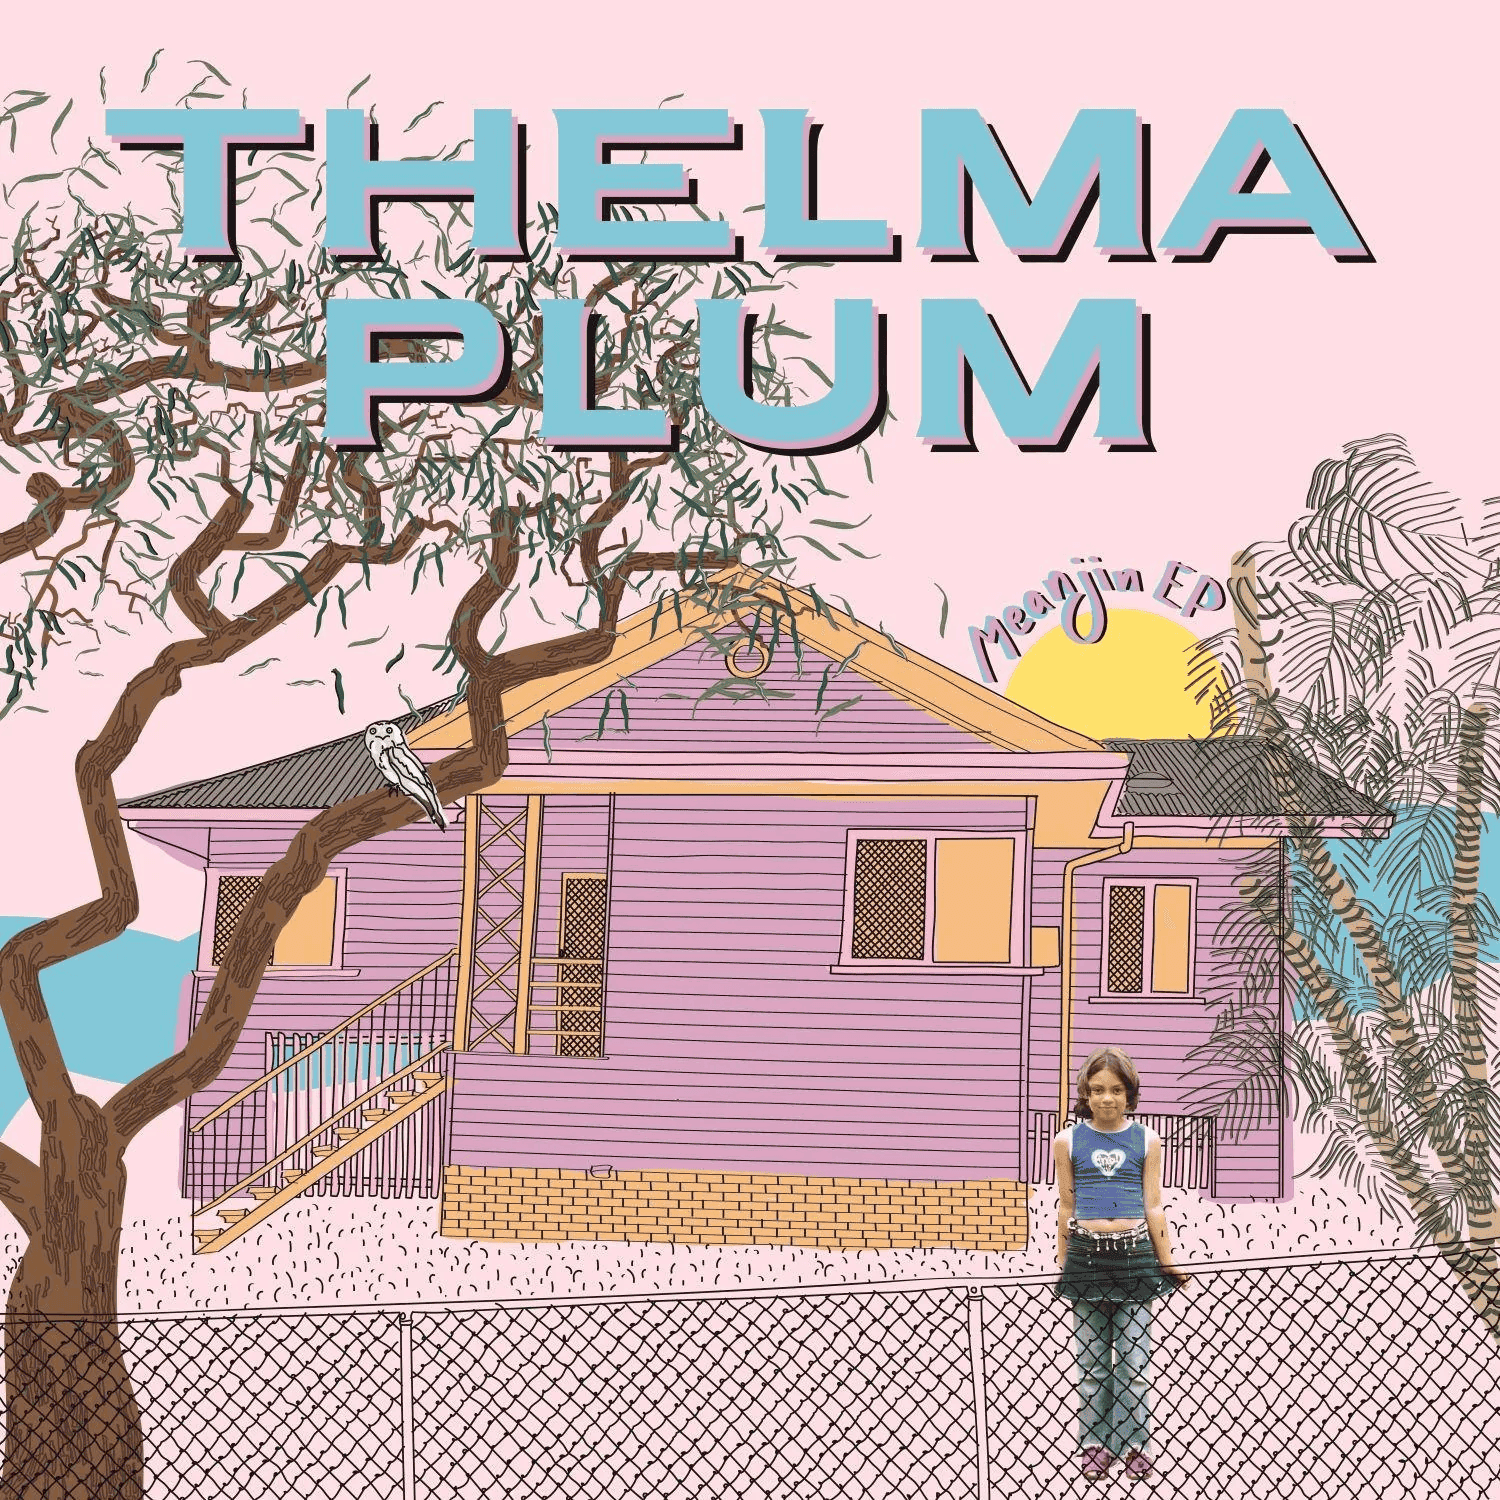 THELMA PLUM - Meanjin Vinyl - JWrayRecords